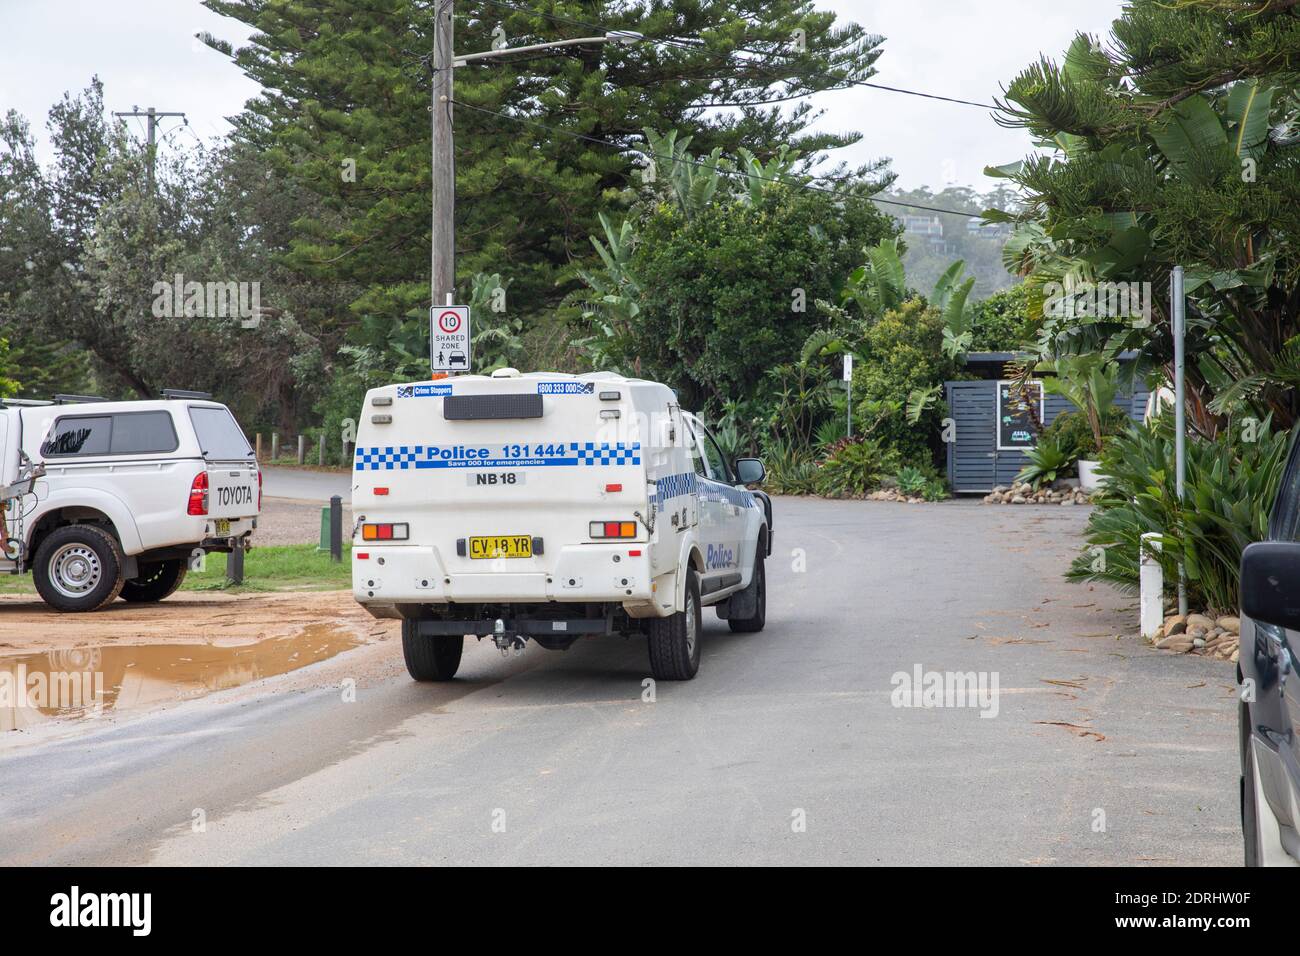 NSW police vehicle travelling through Palm beach in Sydney,Australia Stock Photo